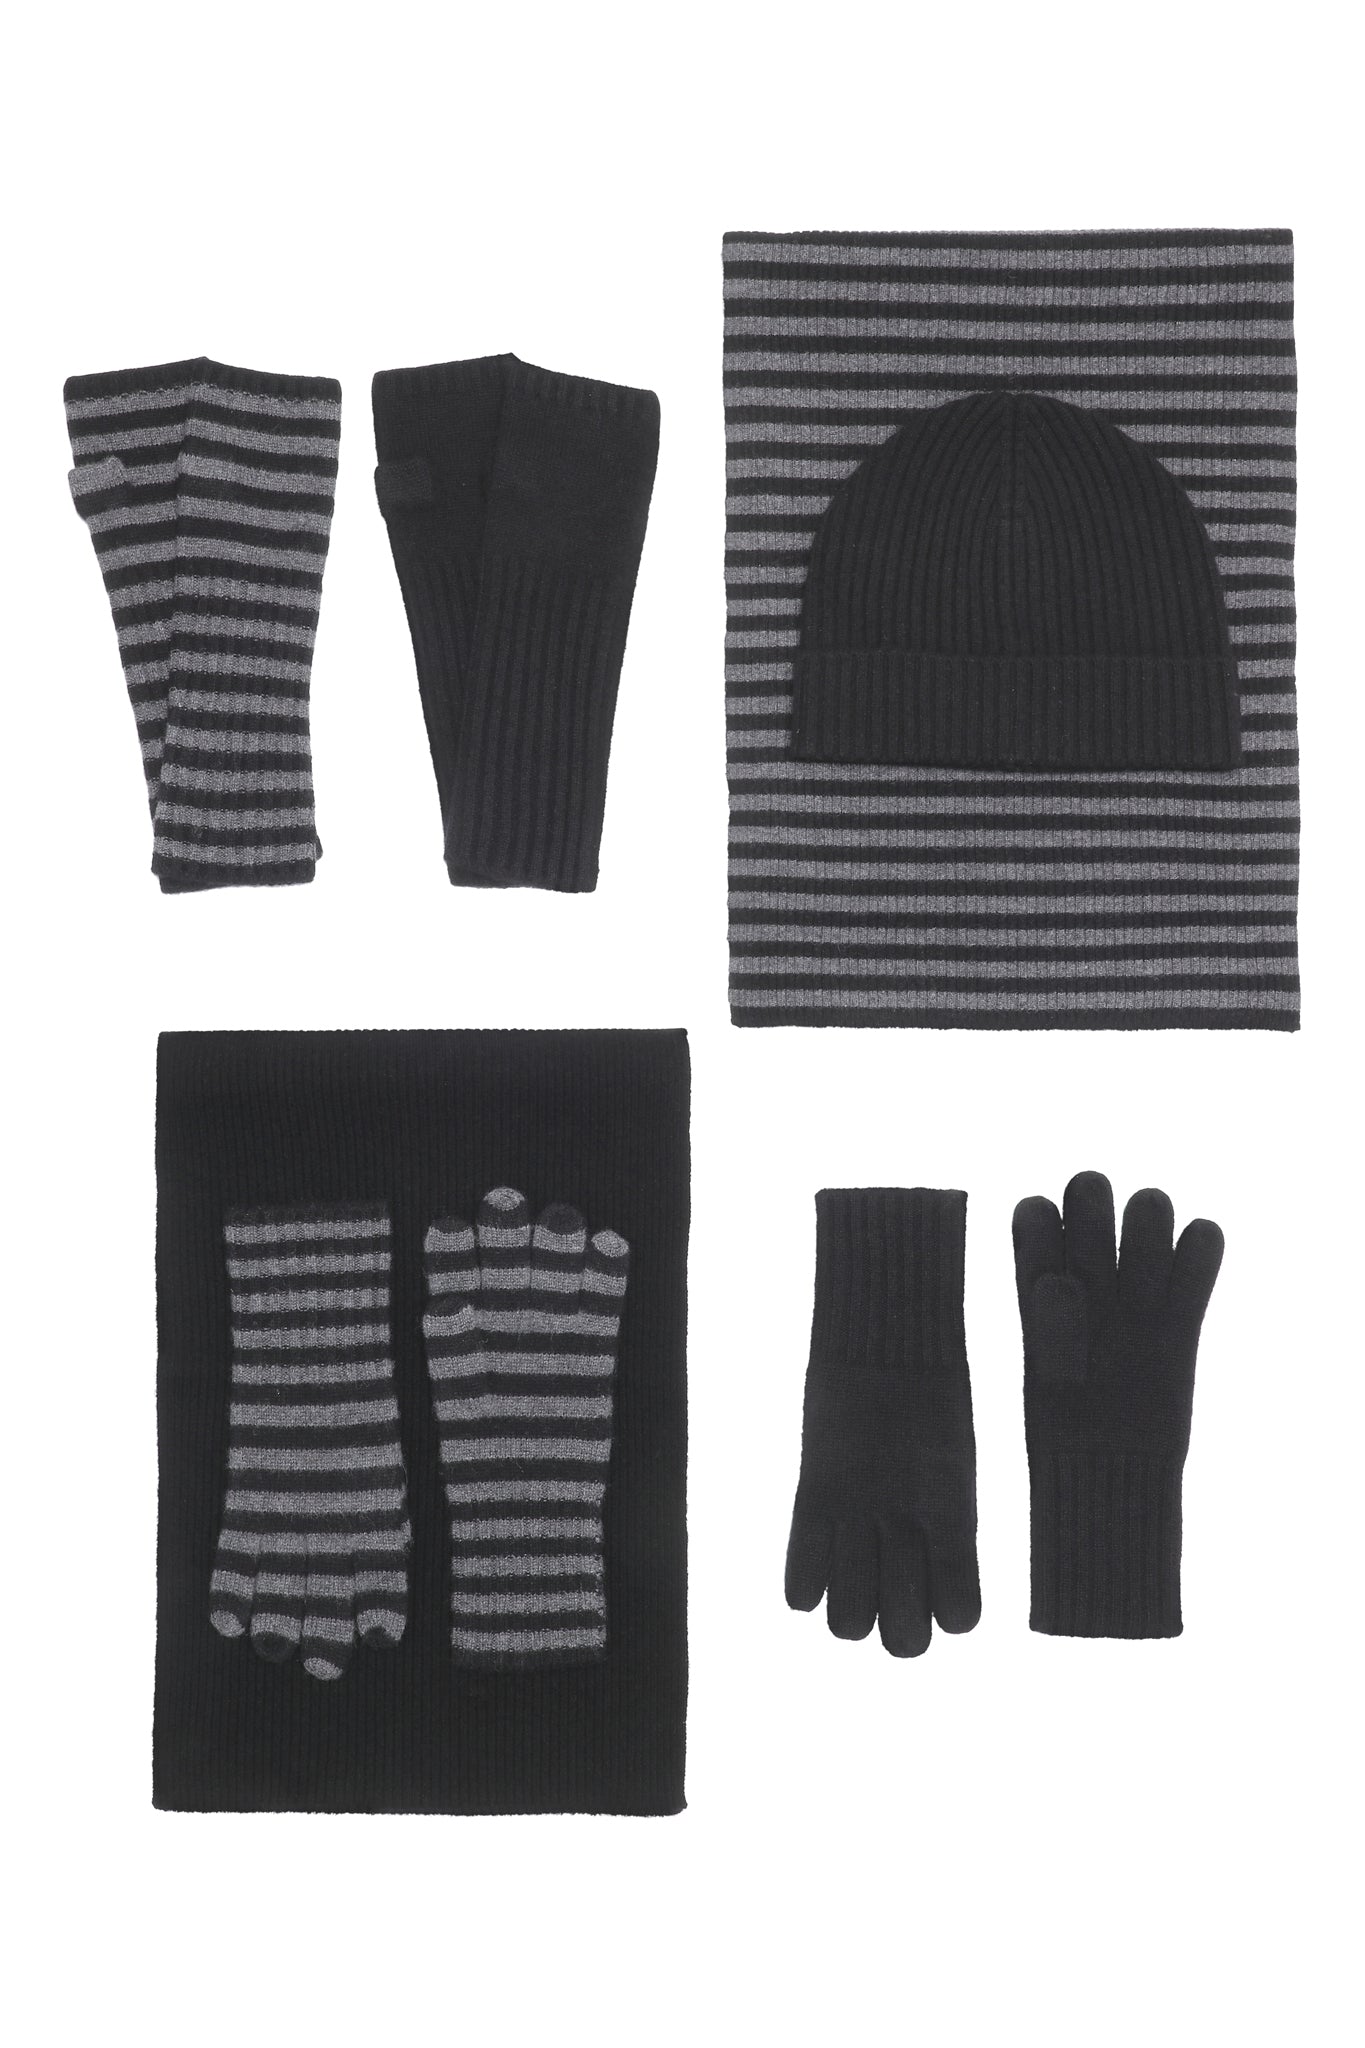 Robin -  håndledsvarmere (fingerløse vanter) i strikket cashmere - Sort og Mørkegrå Striber